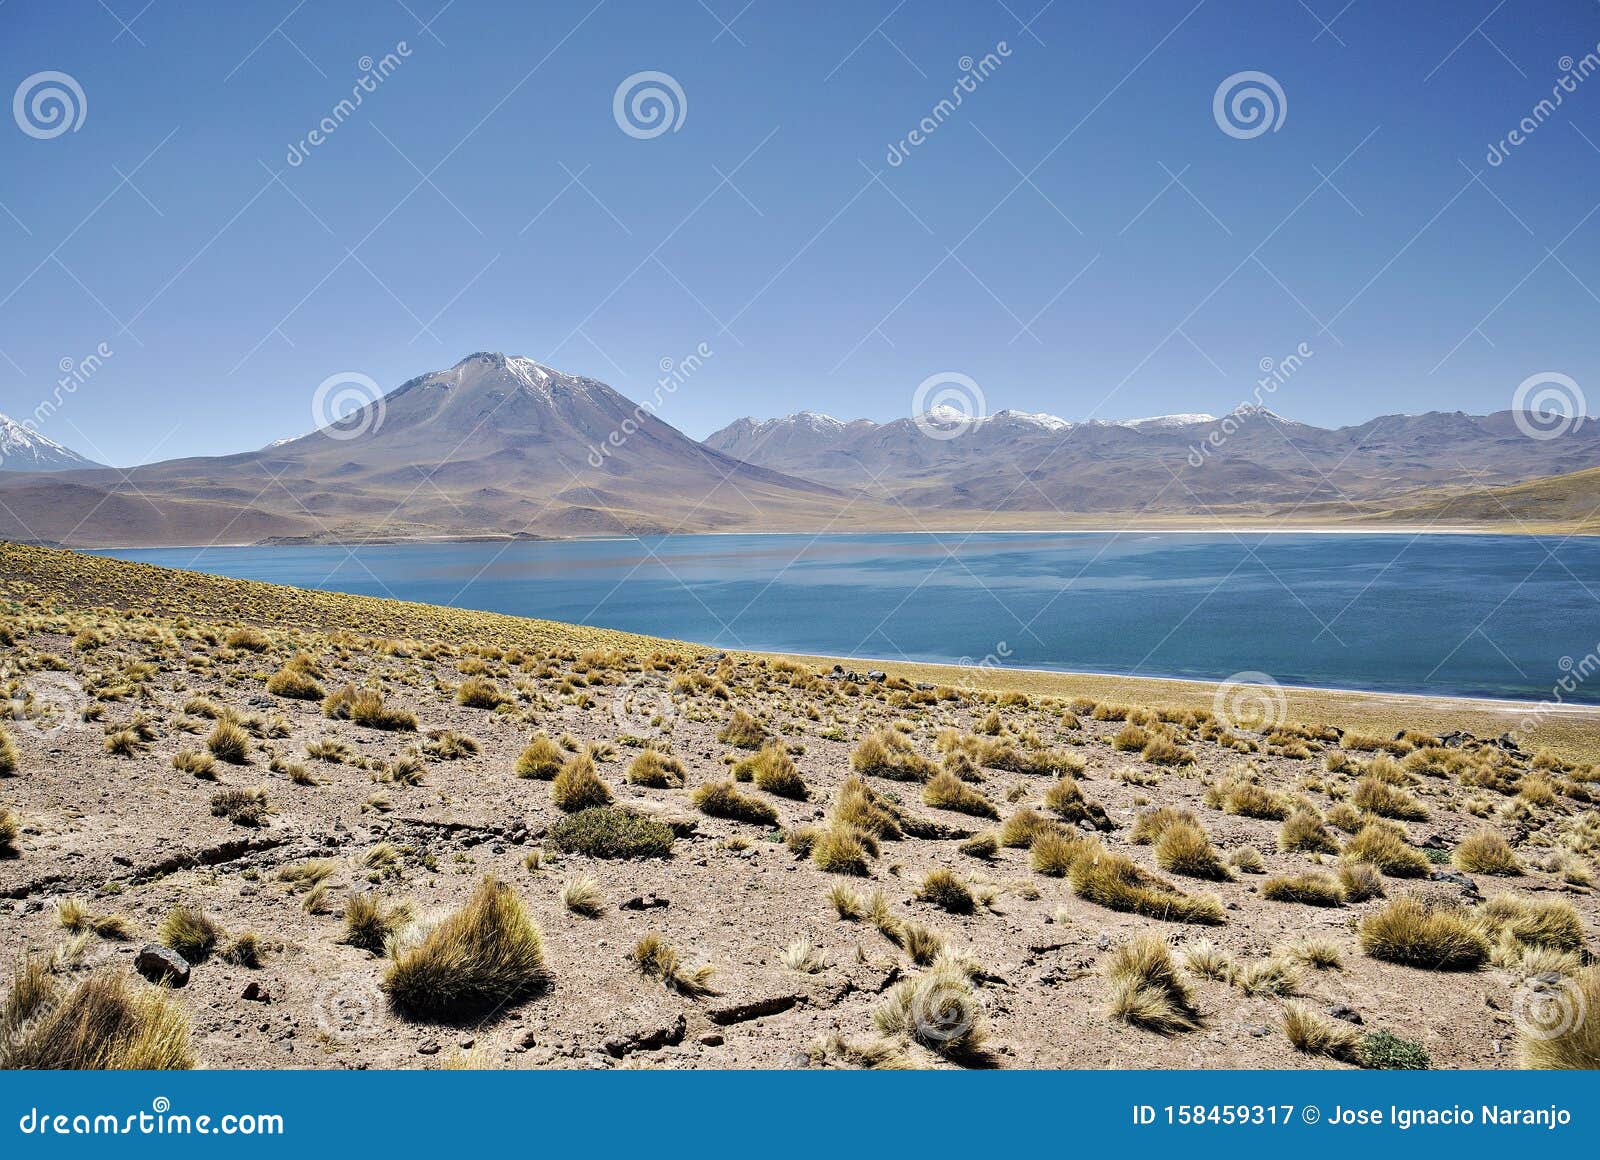 lake miscanti with vulcano miÃÂ±iques